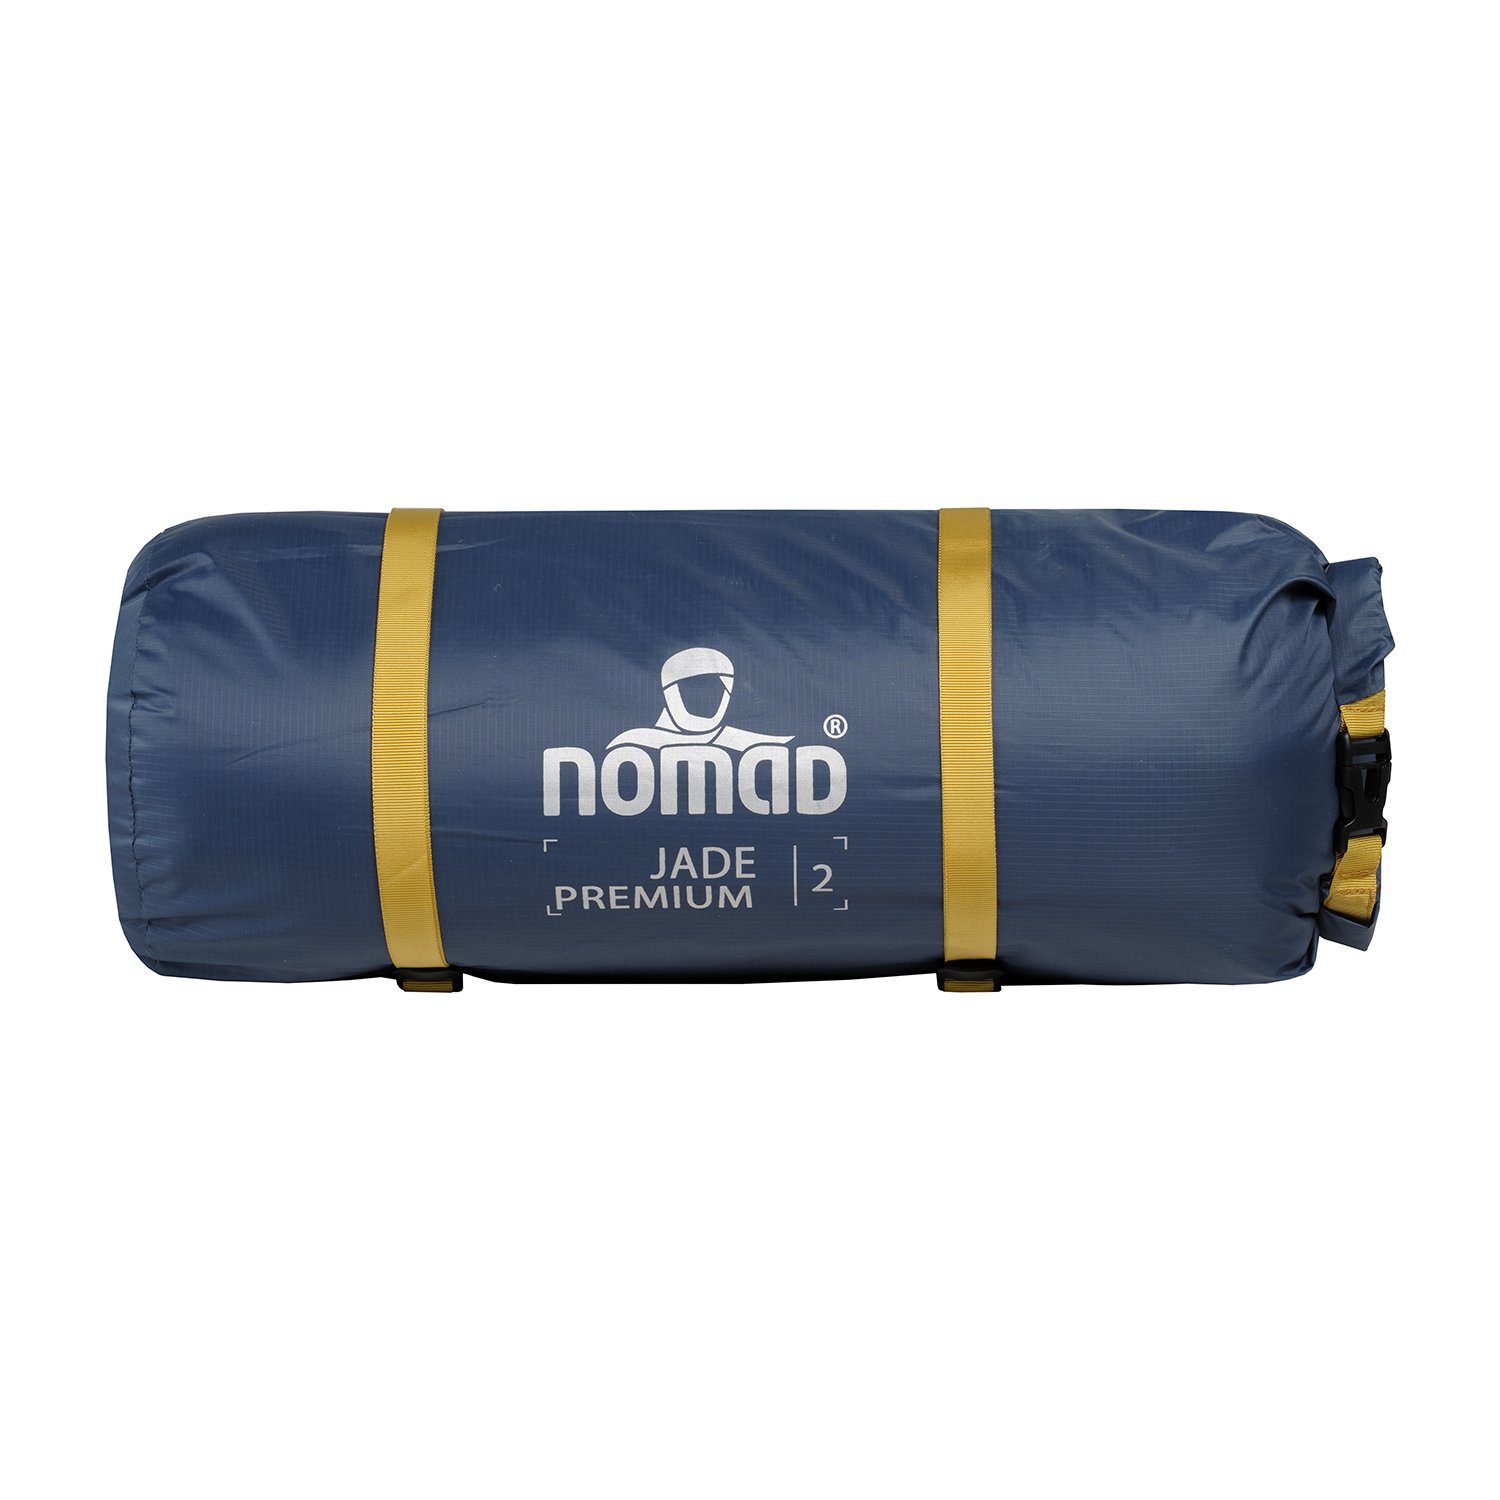 Kuppelzelt Kuppelzelt 2 Nomad (2,6kg) Premium Nomad Jade